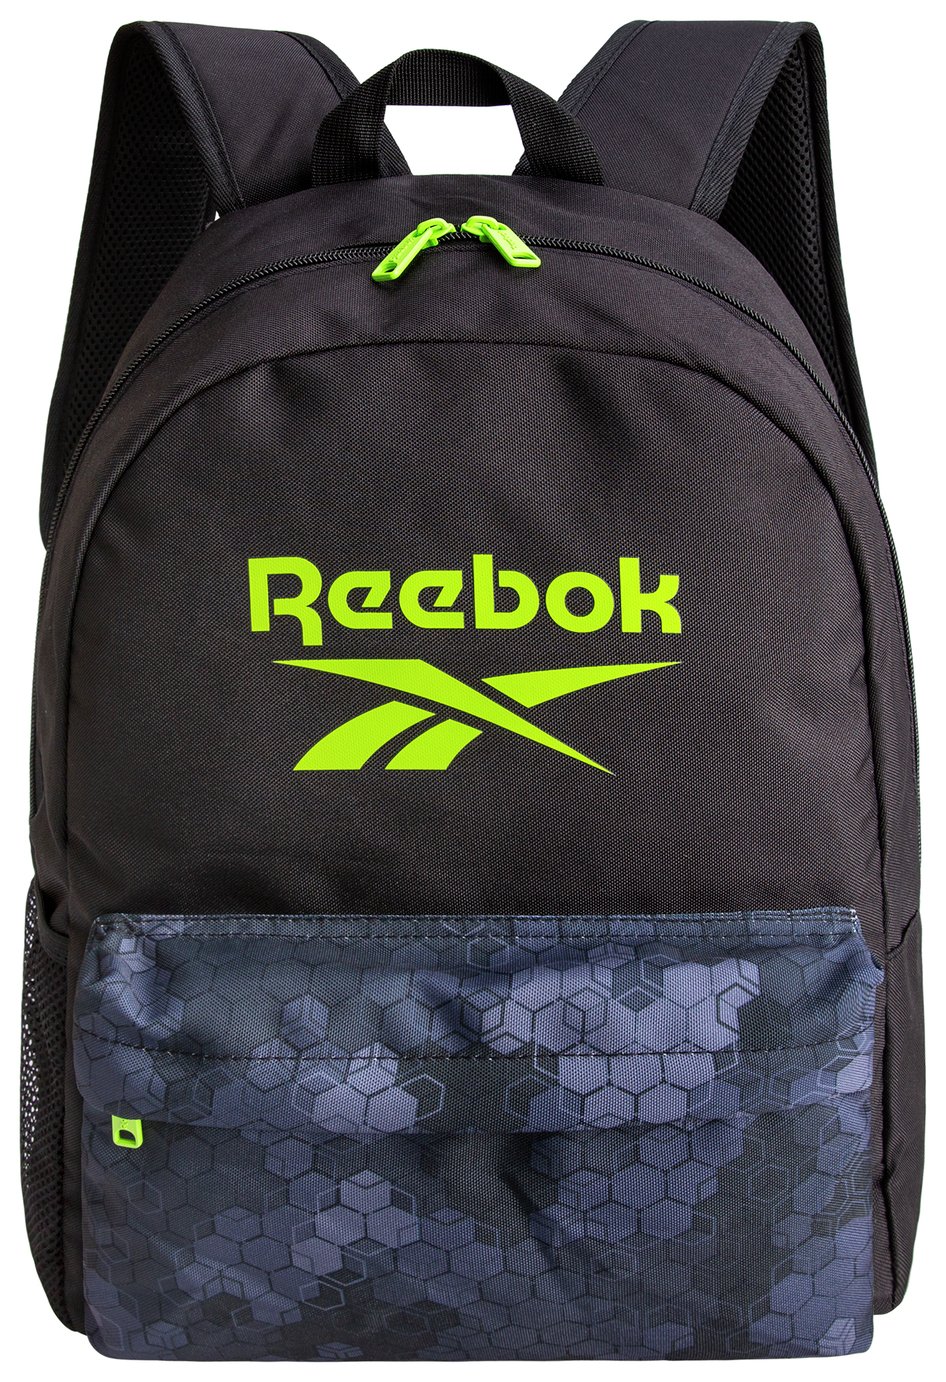 Reebok Urban Backpack  - Black-Lime